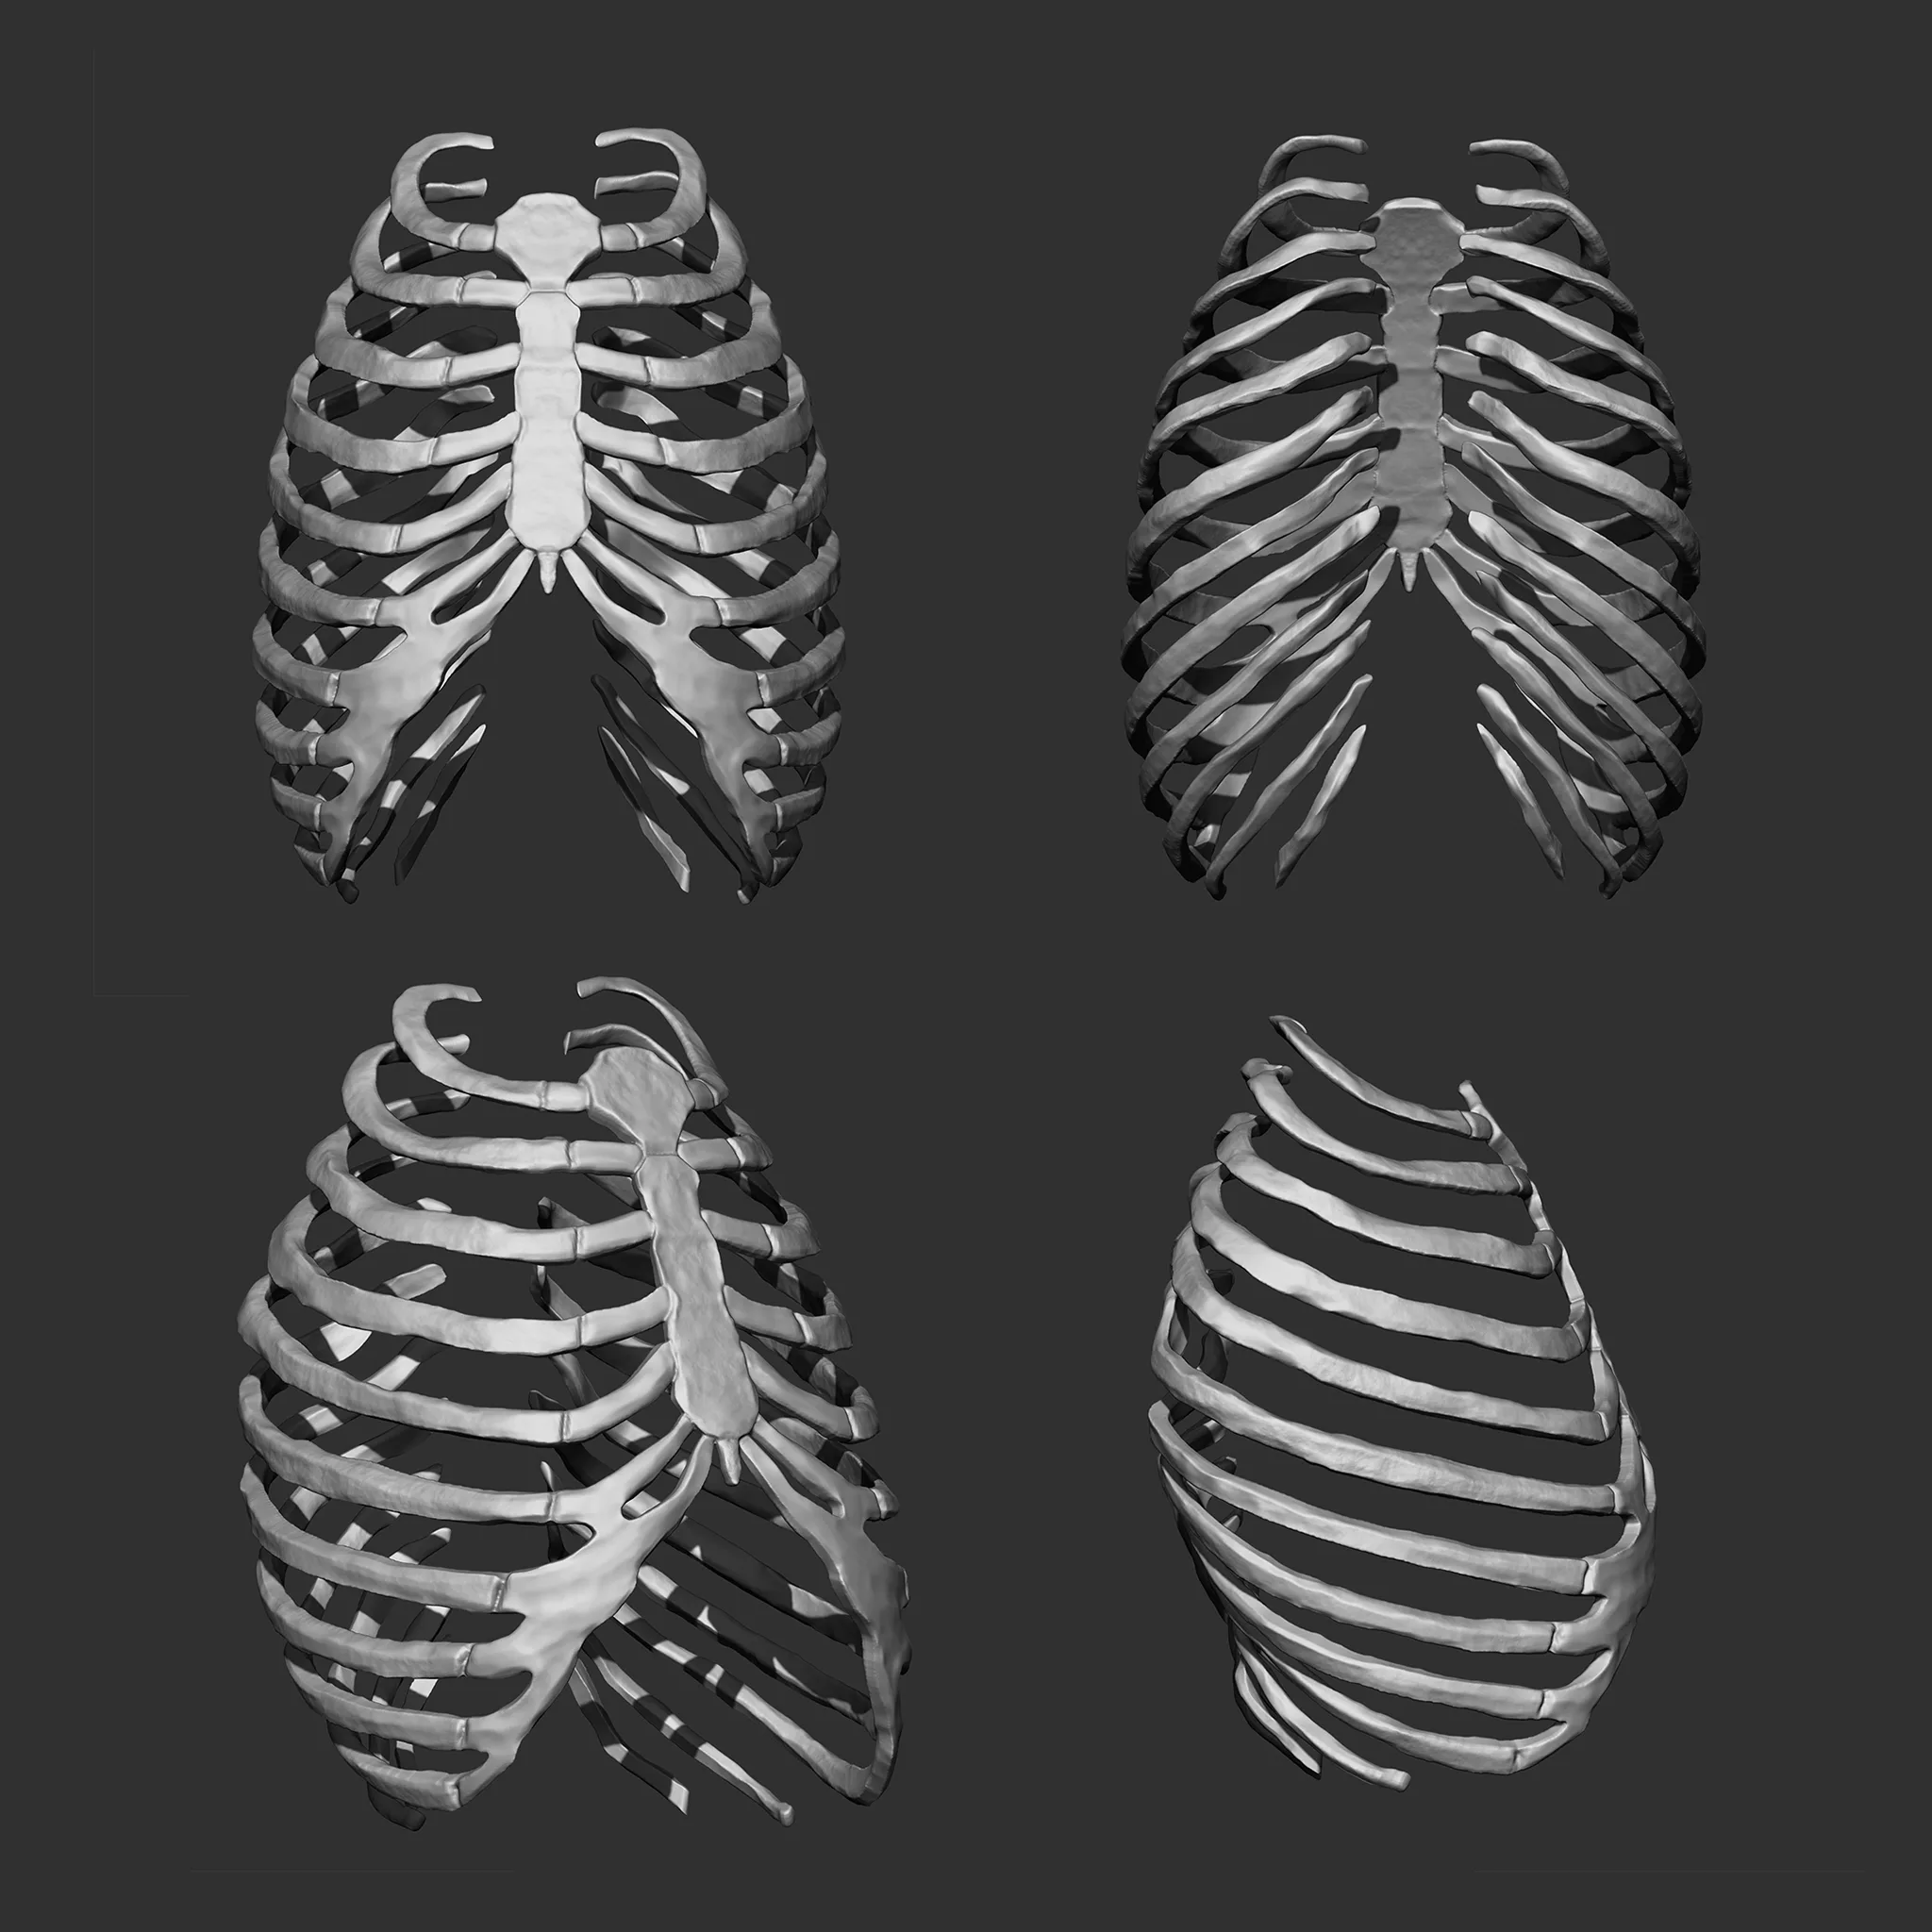 (Skeleton) Human Bones Collection IMM\Stl\Obj Brush Pack 26 in One